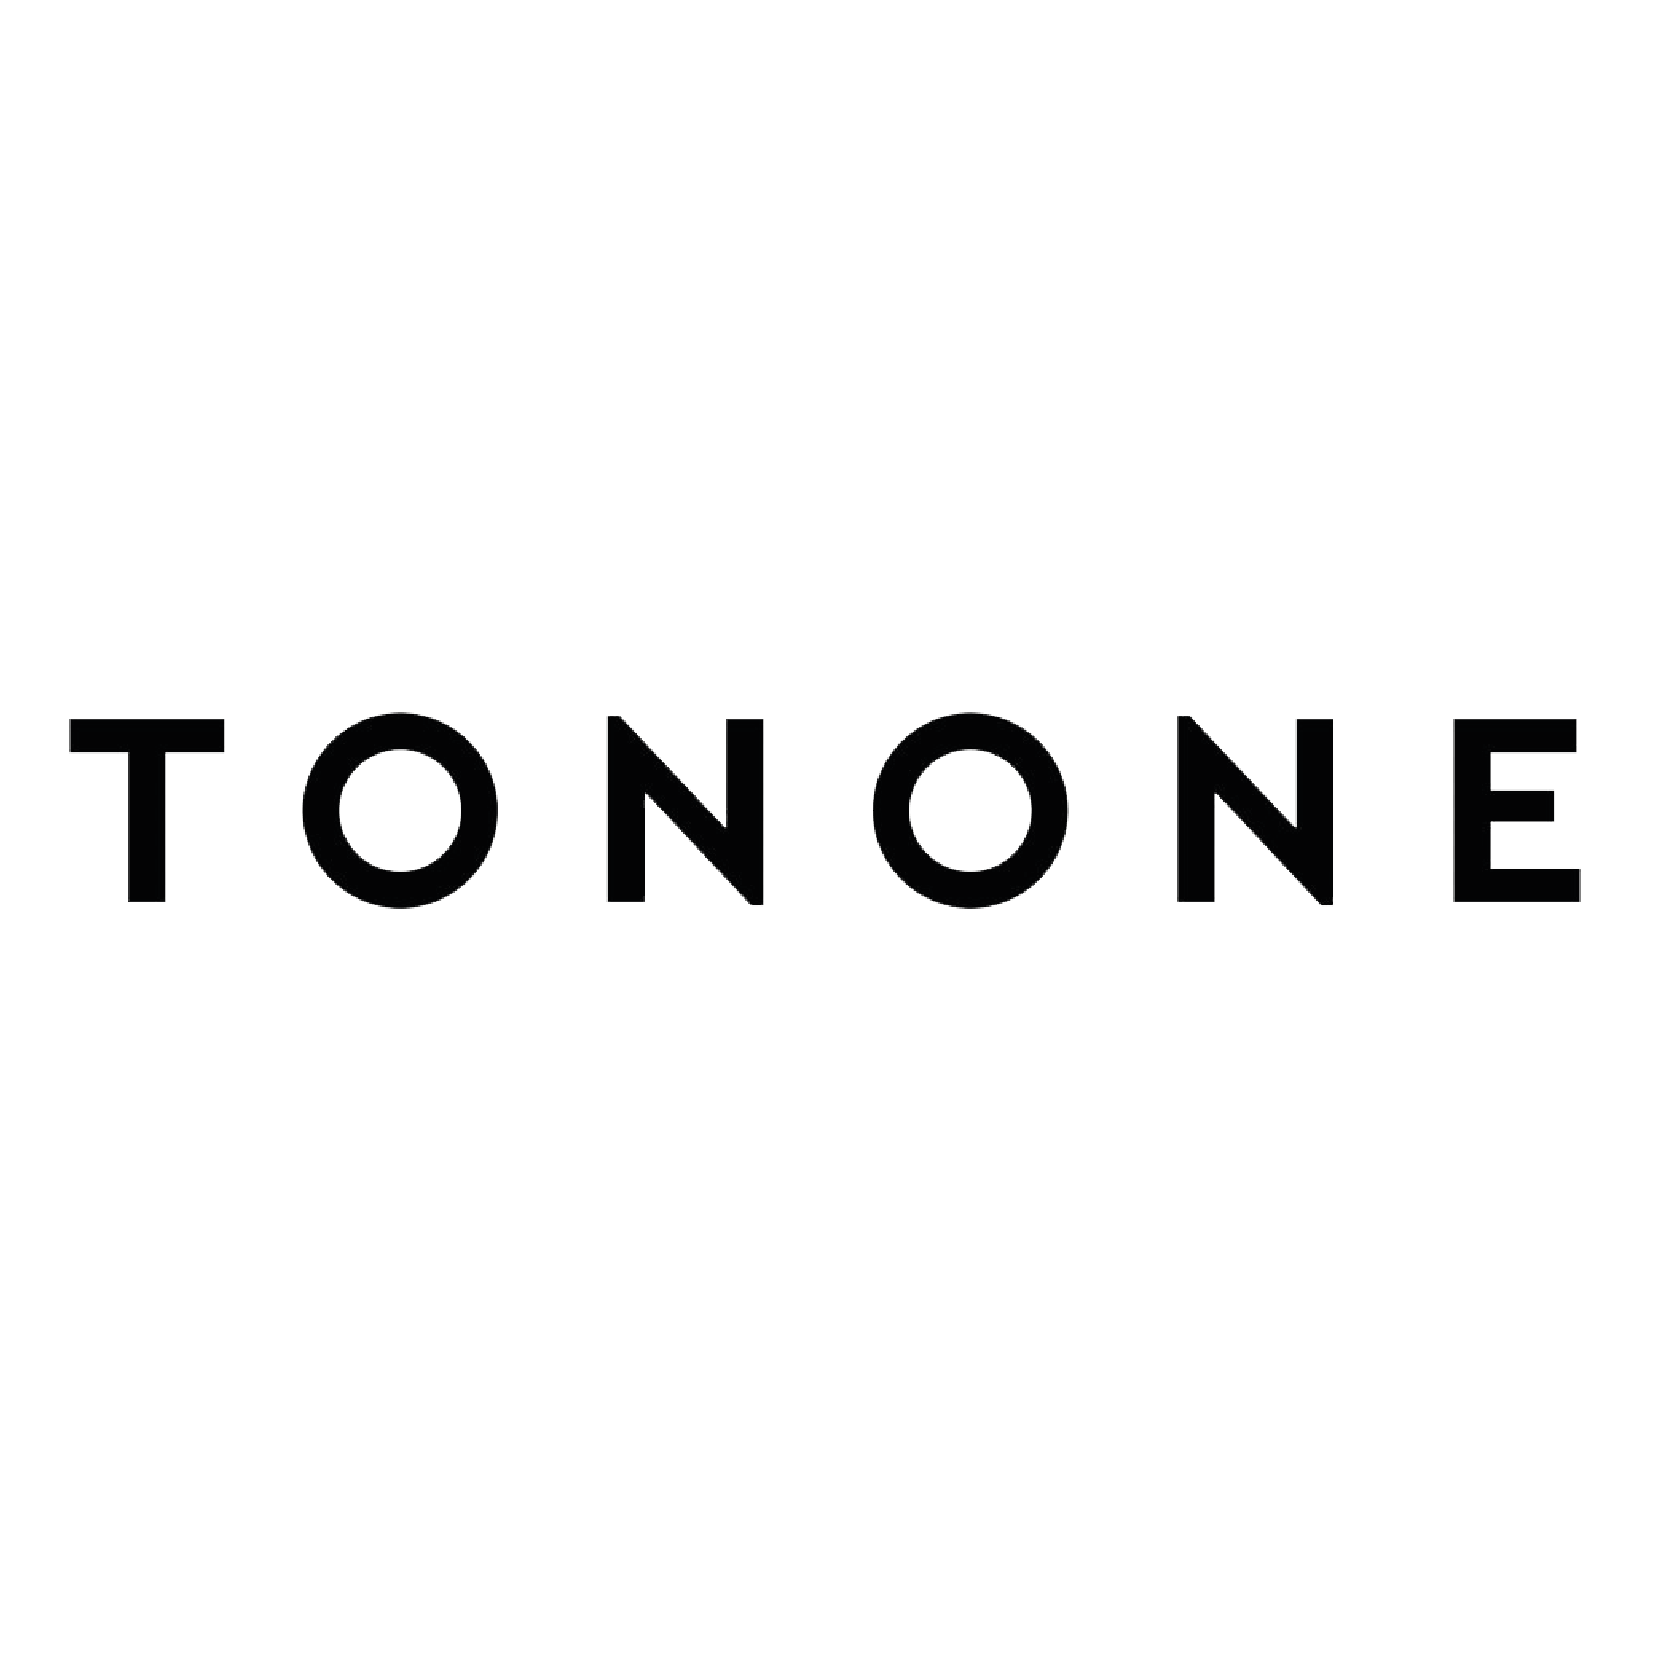 Tonone logo